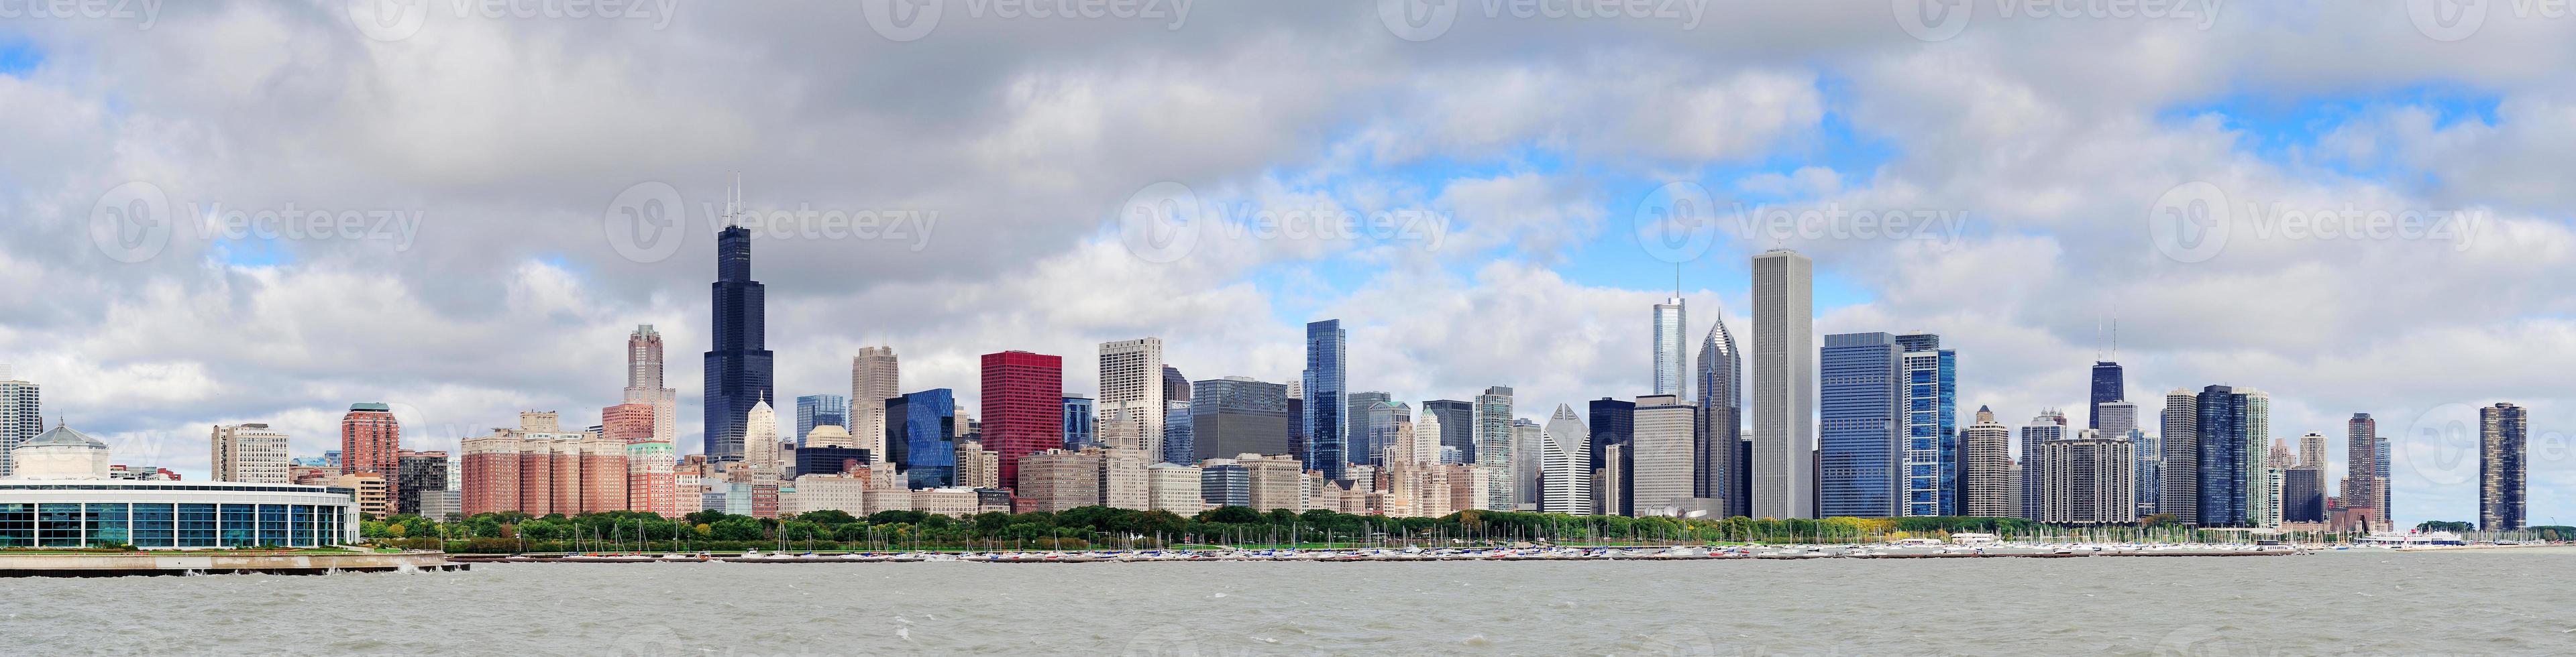 panorama del horizonte de chicago foto